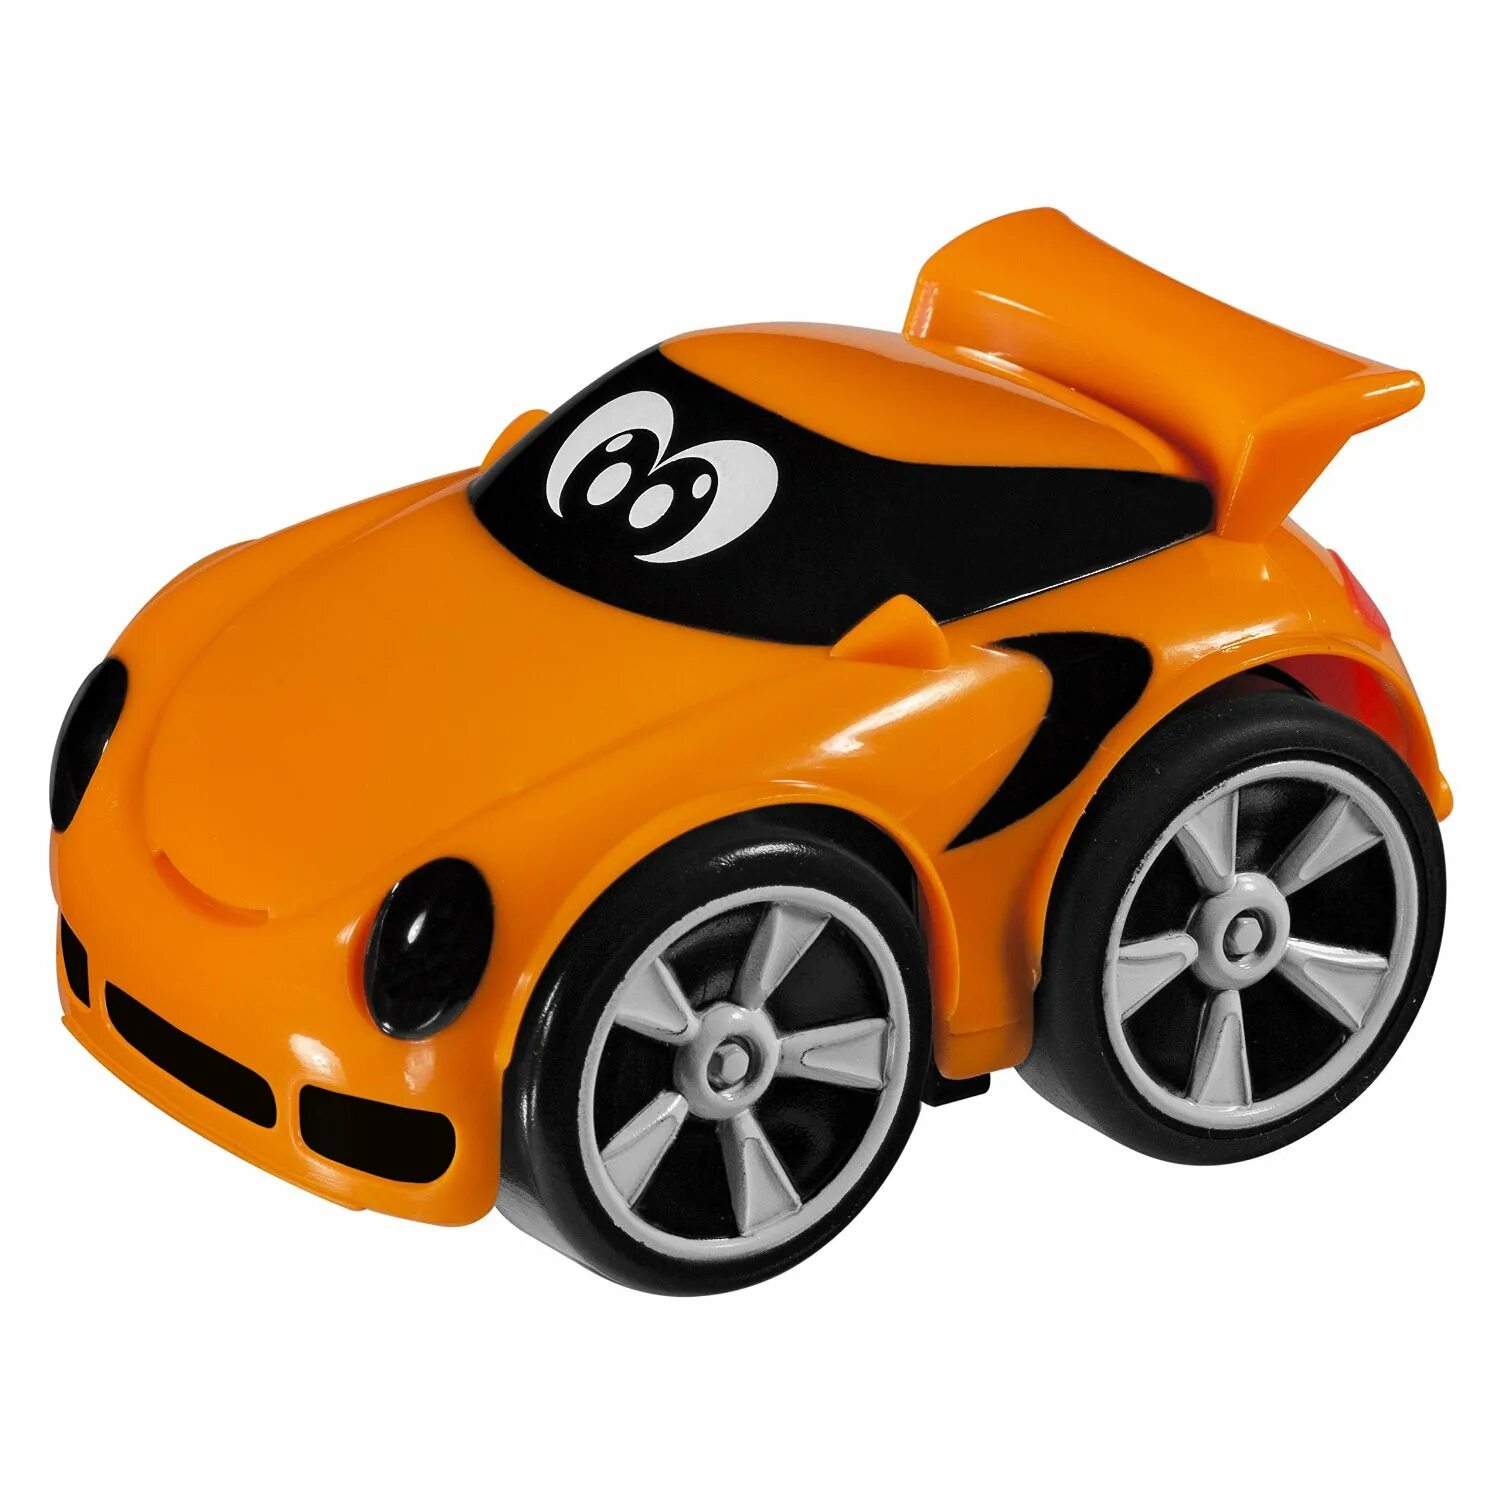 Машинки. Чико машинка оранжевая. Турбо-машинка Chicco 61784 (оранжевая) арт. 0010221. Гоночная машина Chicco Turbo Team Stunt 18 см. Машинка Chicco 4x4.